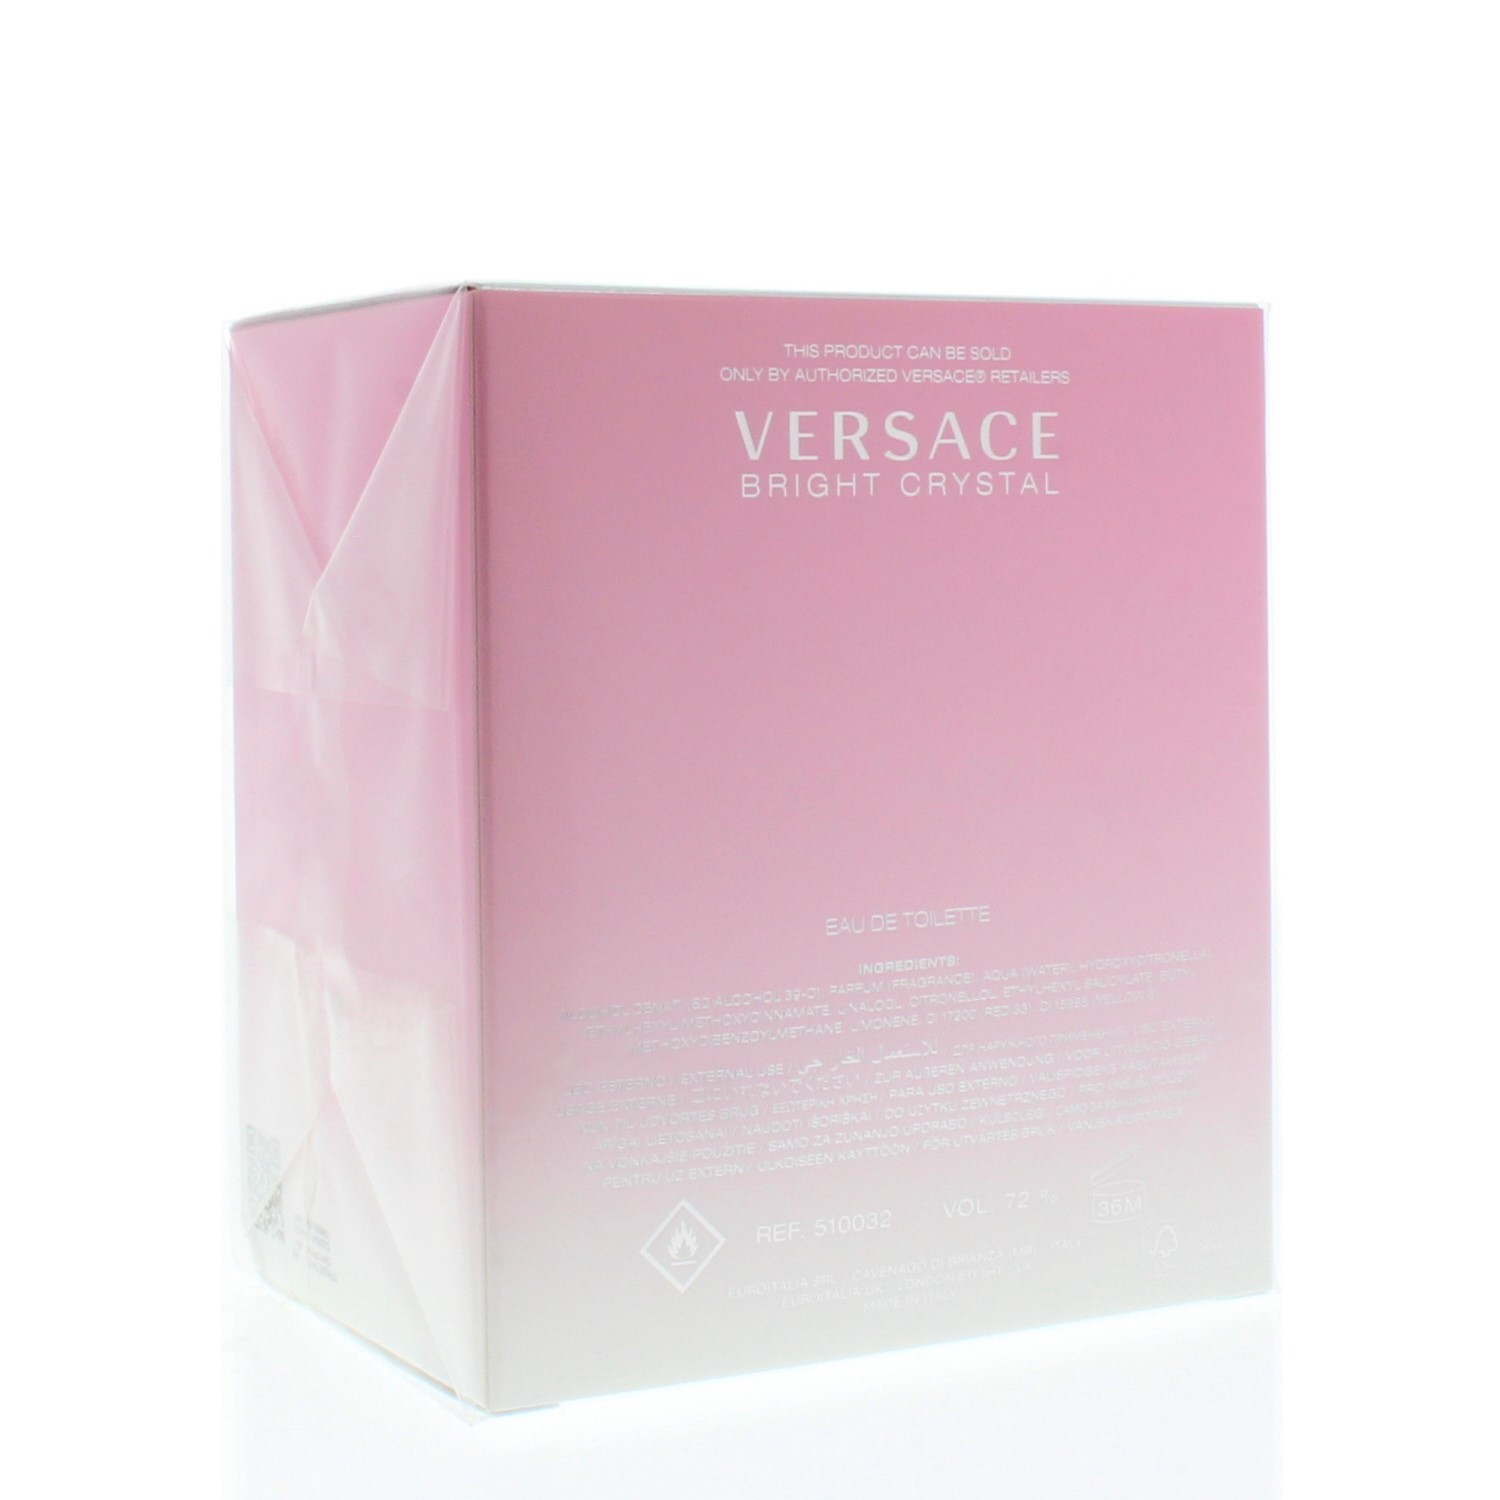 Versace Bright Crystal Eau De Toilette Spray, Perfume for Women, 3 oz - image 2 of 3